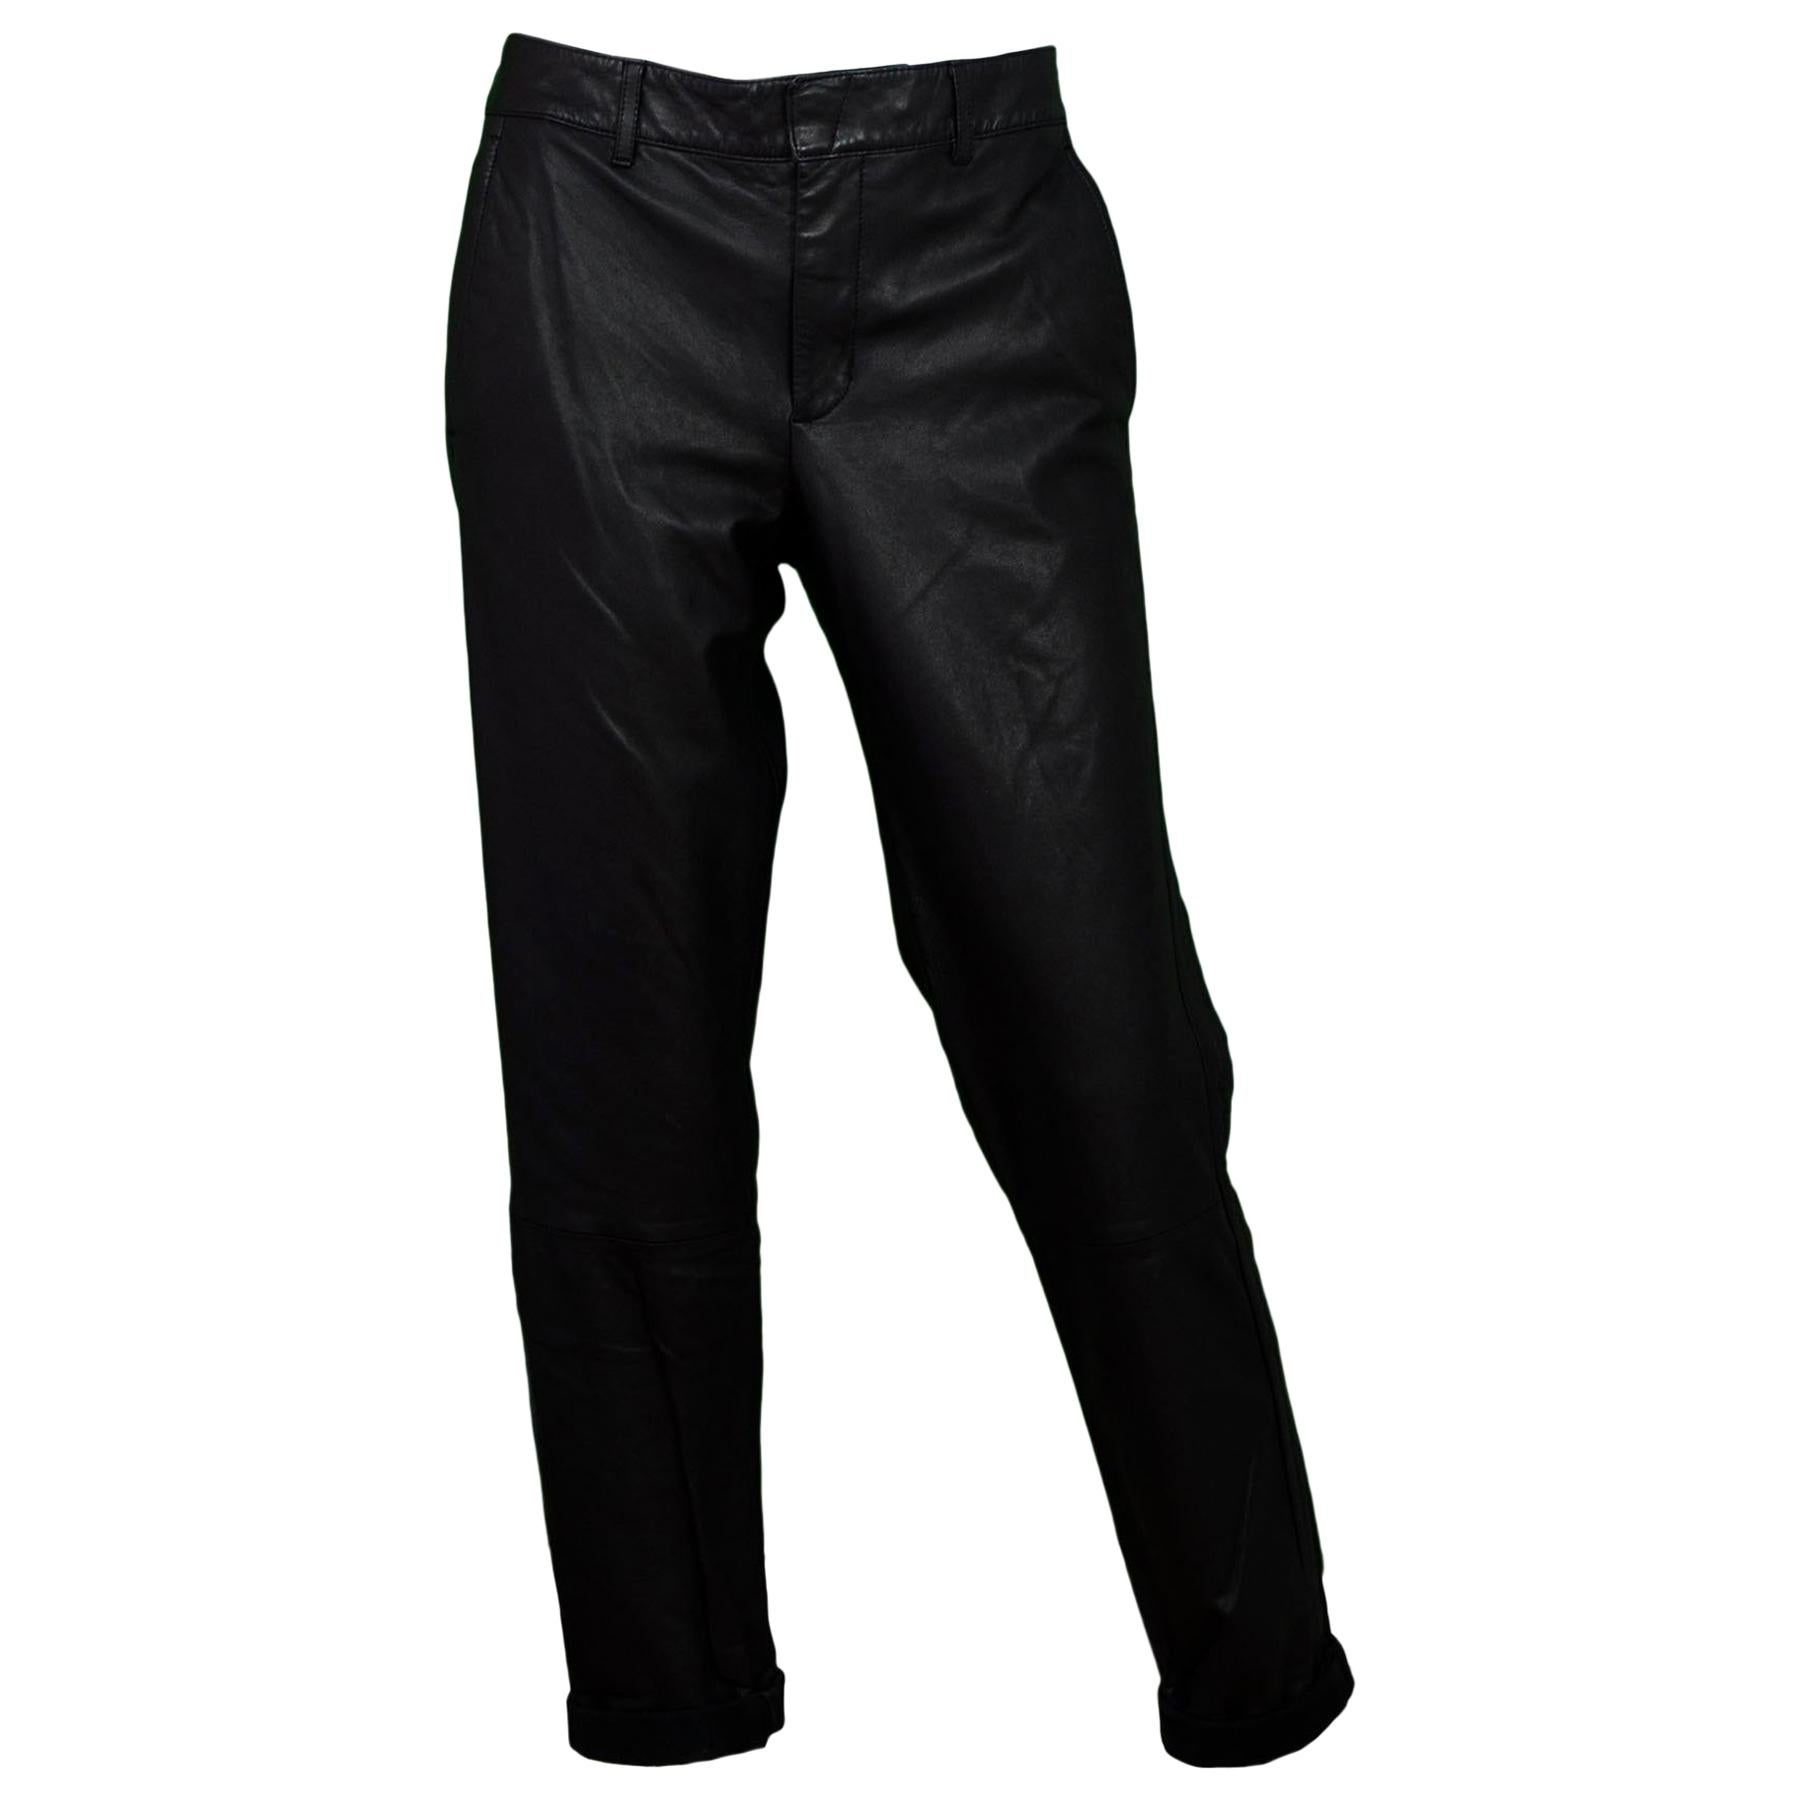 Vince Black Leather Pants sz 10 NWT